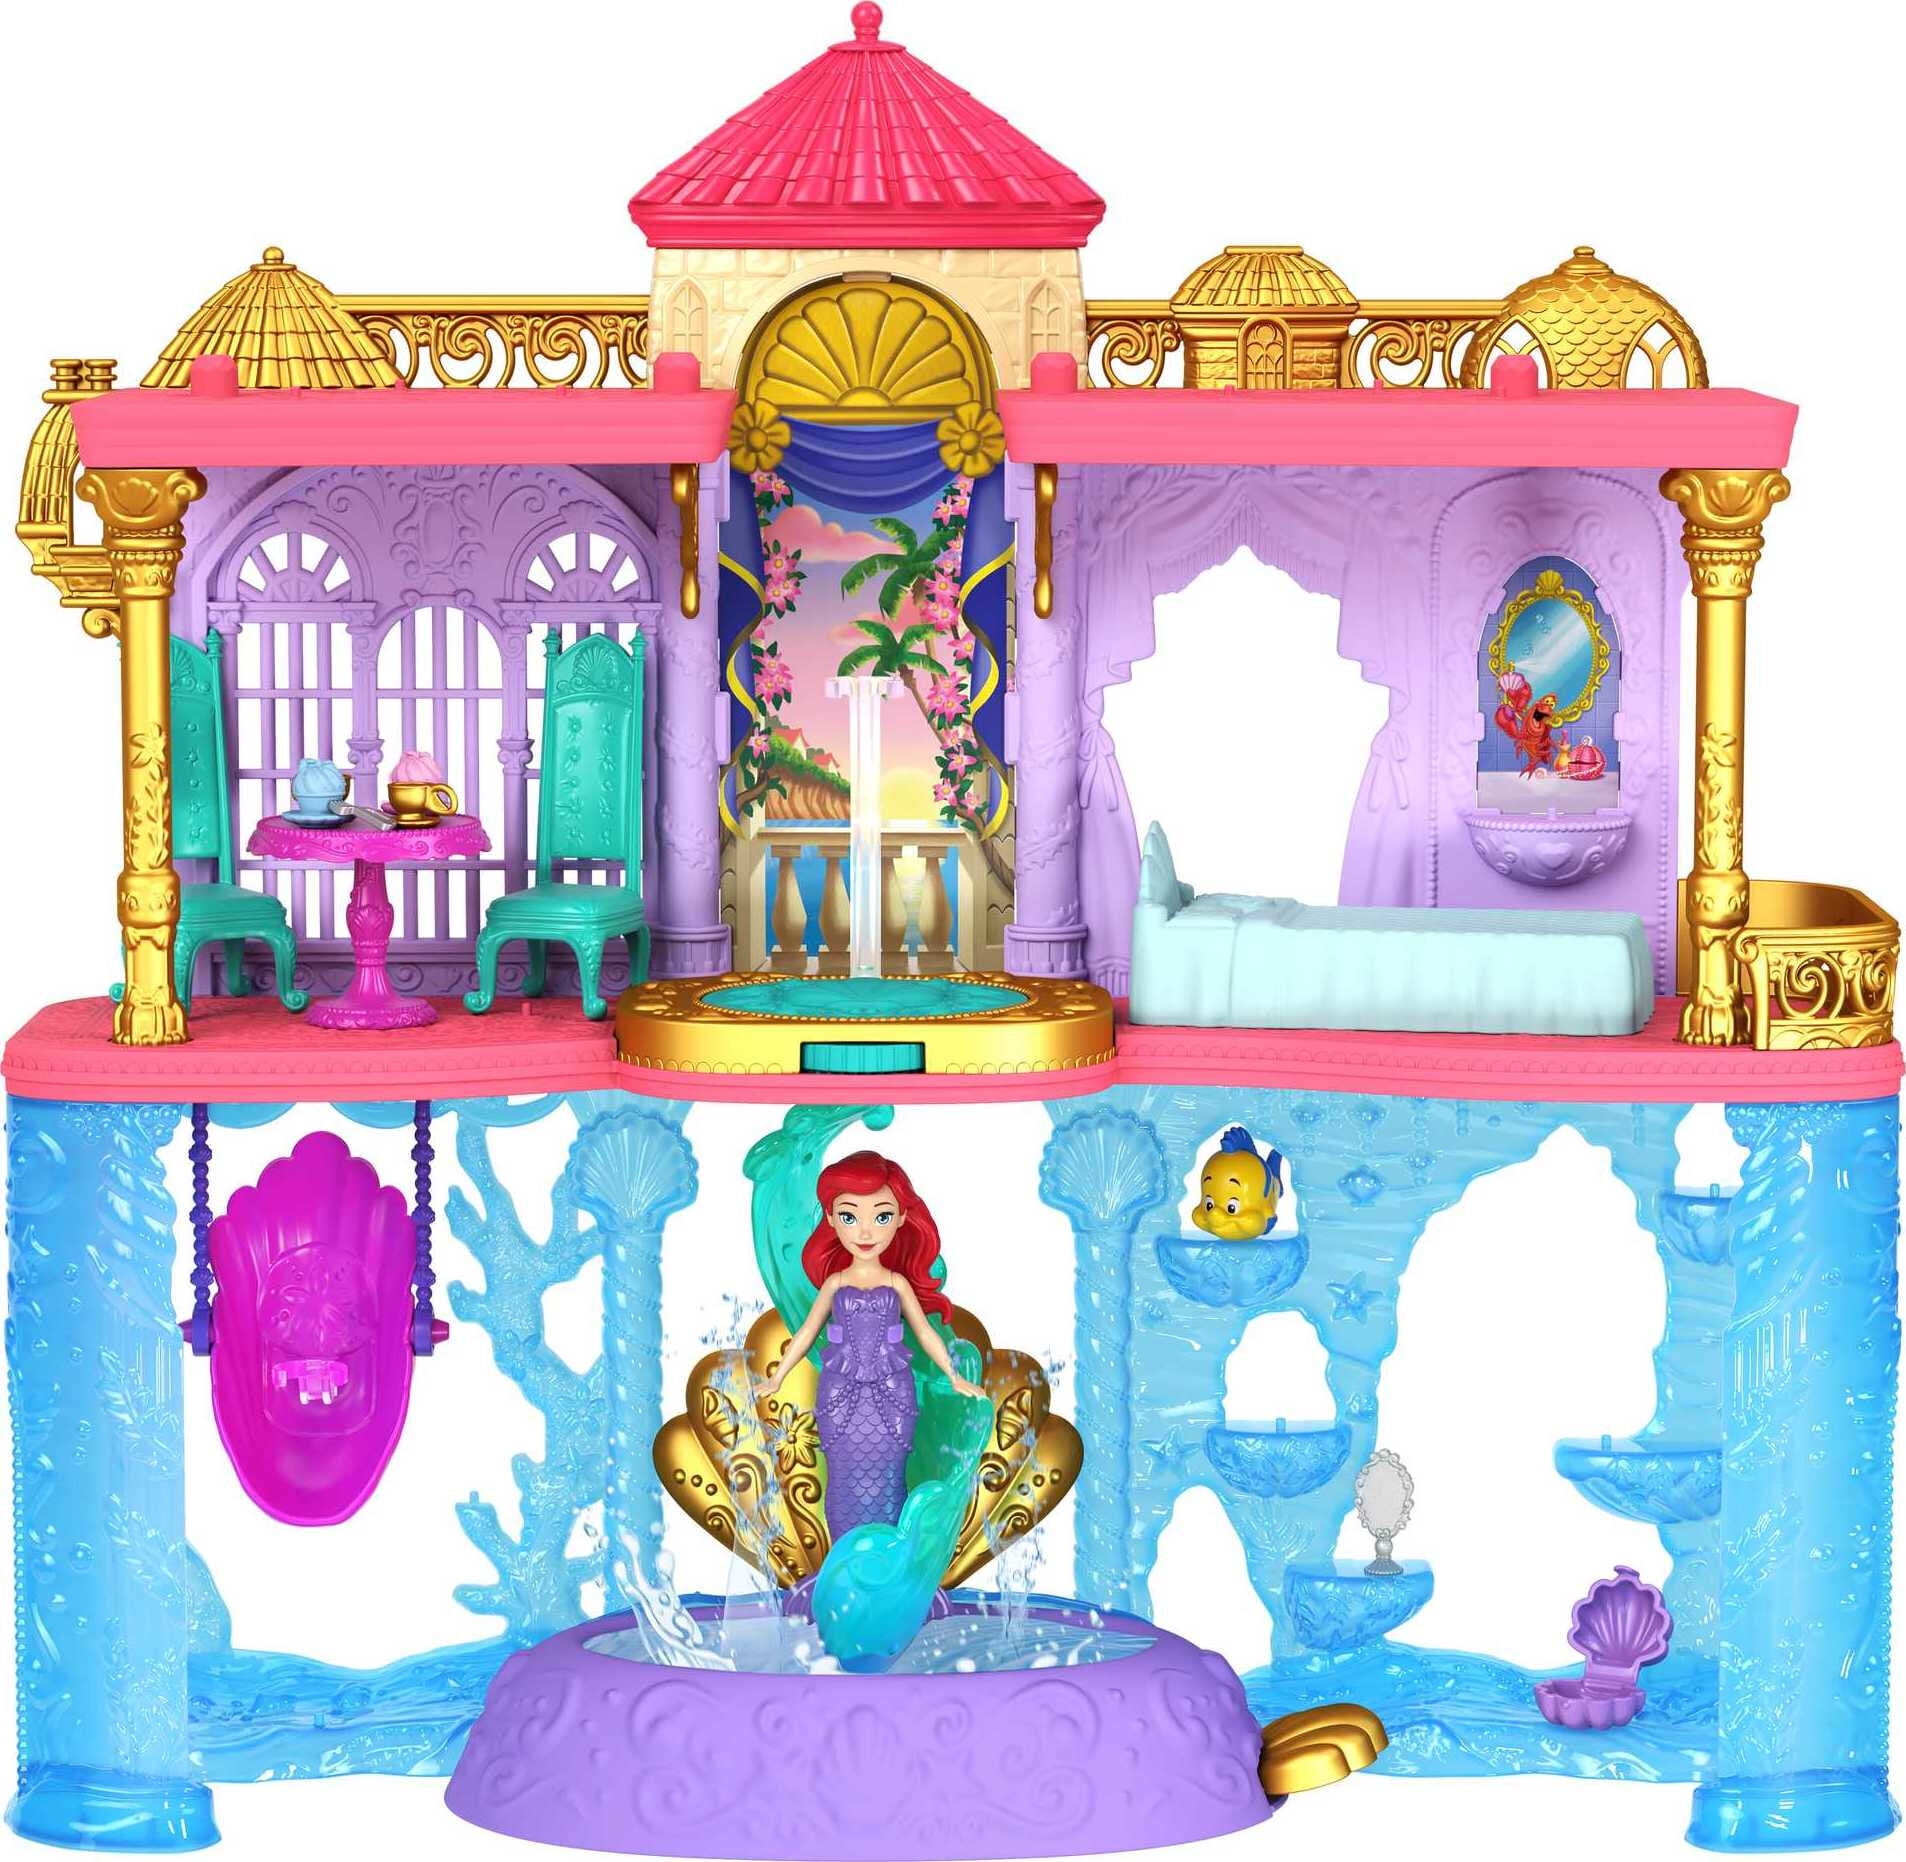 Disney Doorables Movie Moments Series 1 Ariel The Little Mermaid Mini  Figures